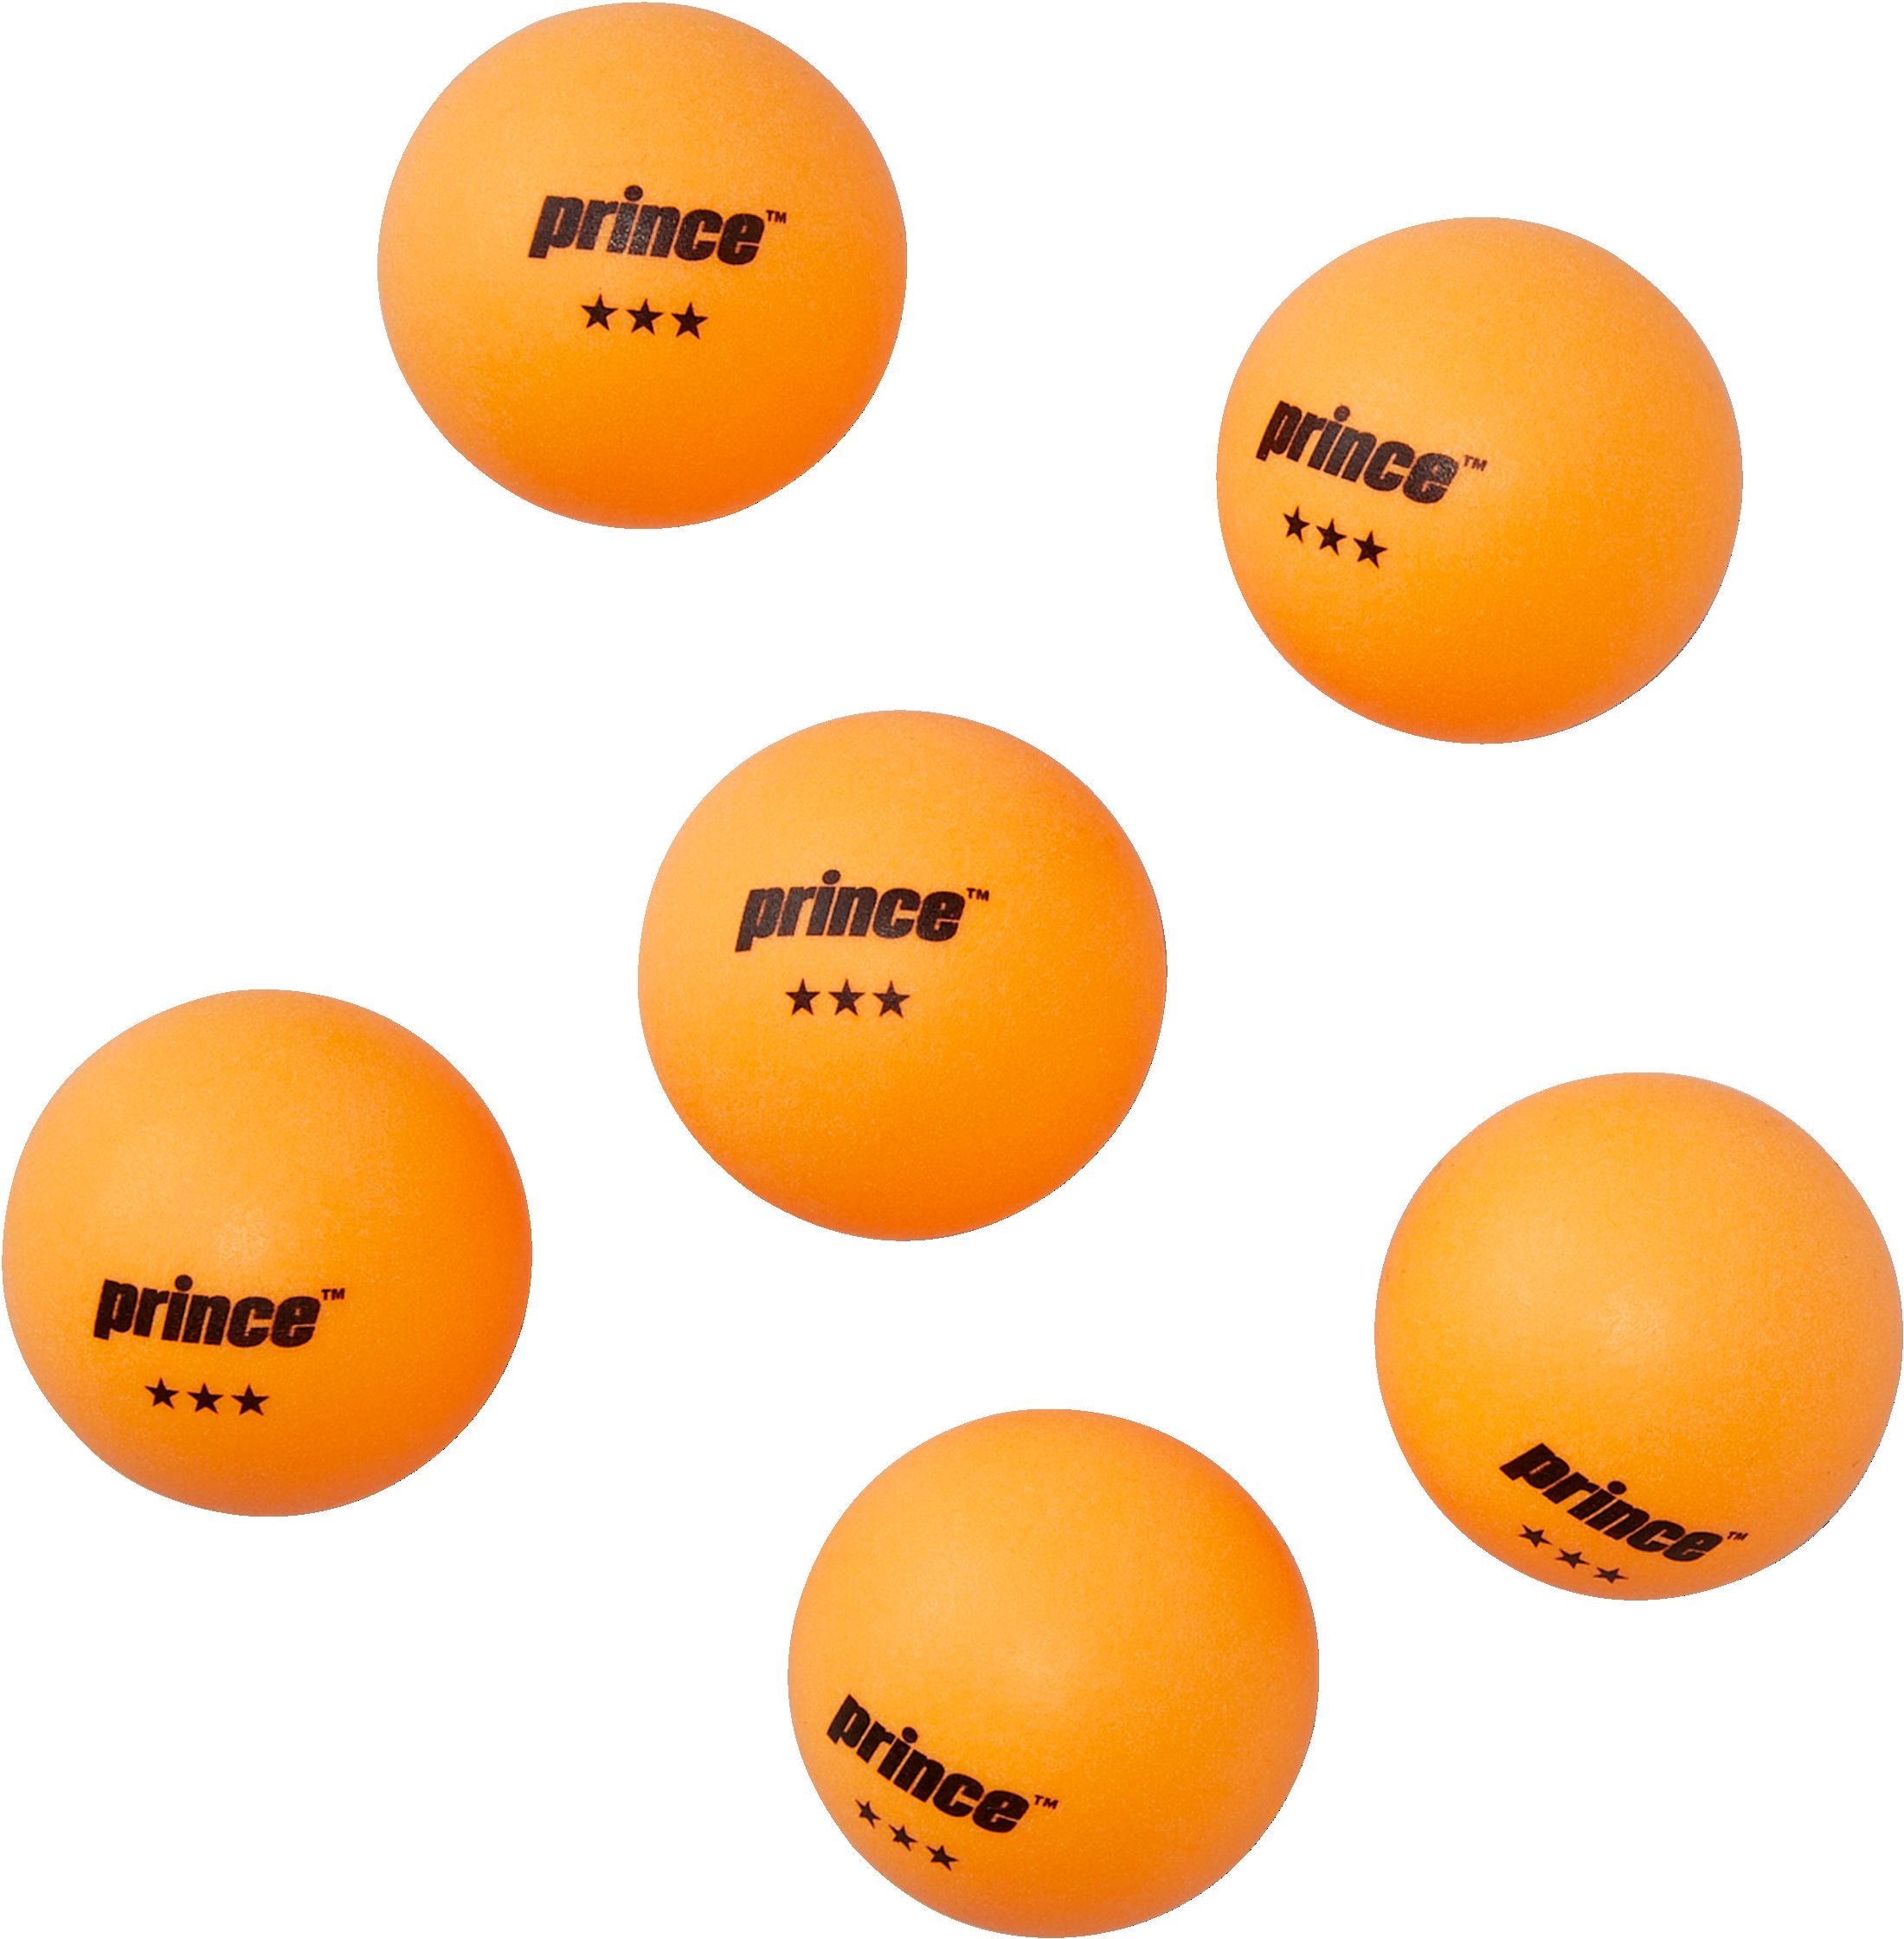 Prince 3 Star Table Tennis Balls - 6 Pack